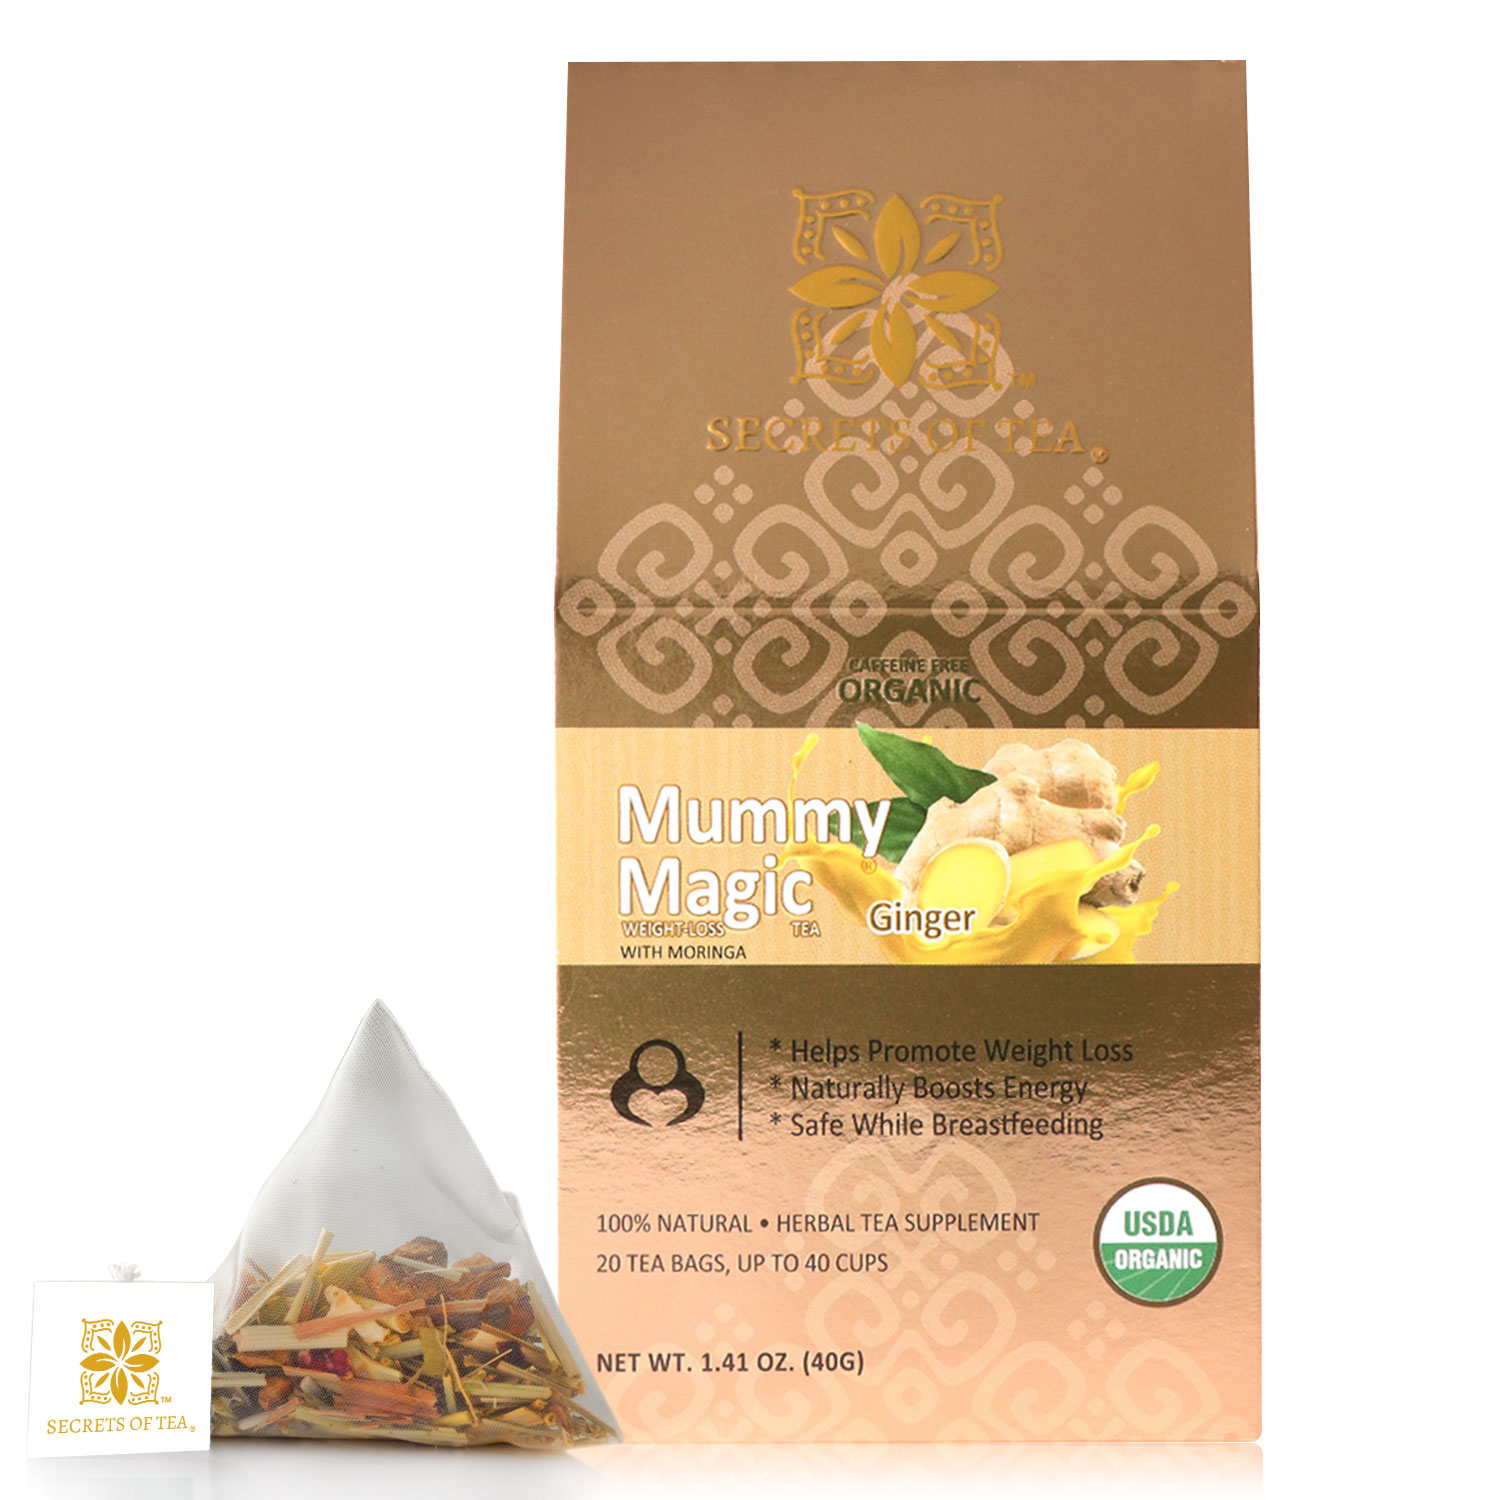 Secrets of Tea Mummy Magic Weight-Loss Ginger Tea 2 innerpacks per case 2.0 oz